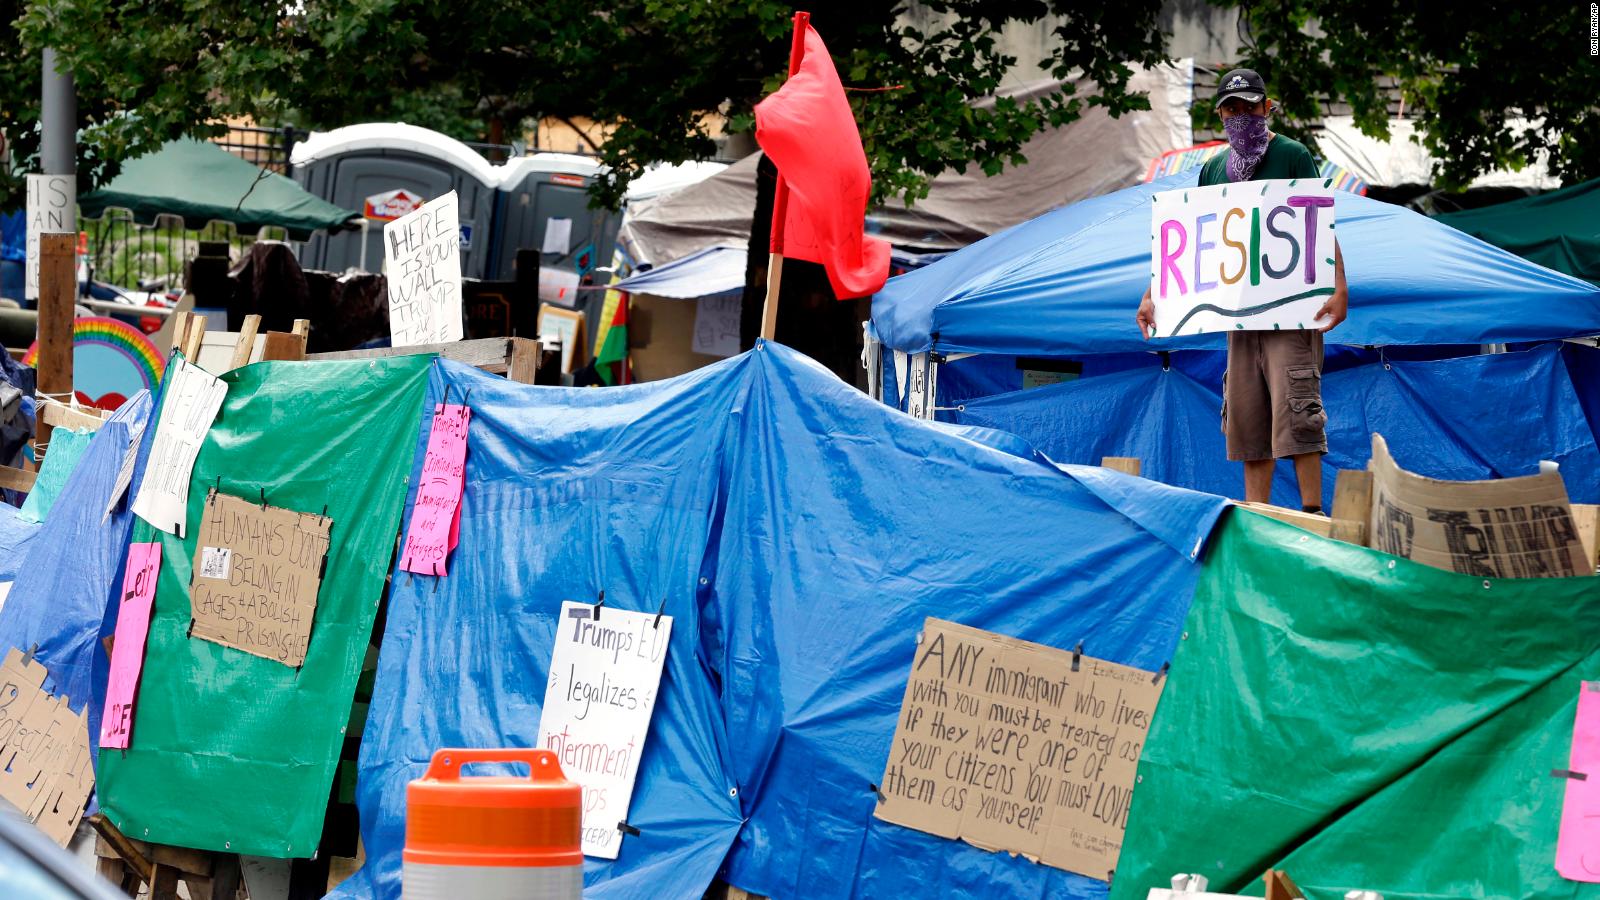 Occupy ICE encampment faces eviction in Portland - CNN